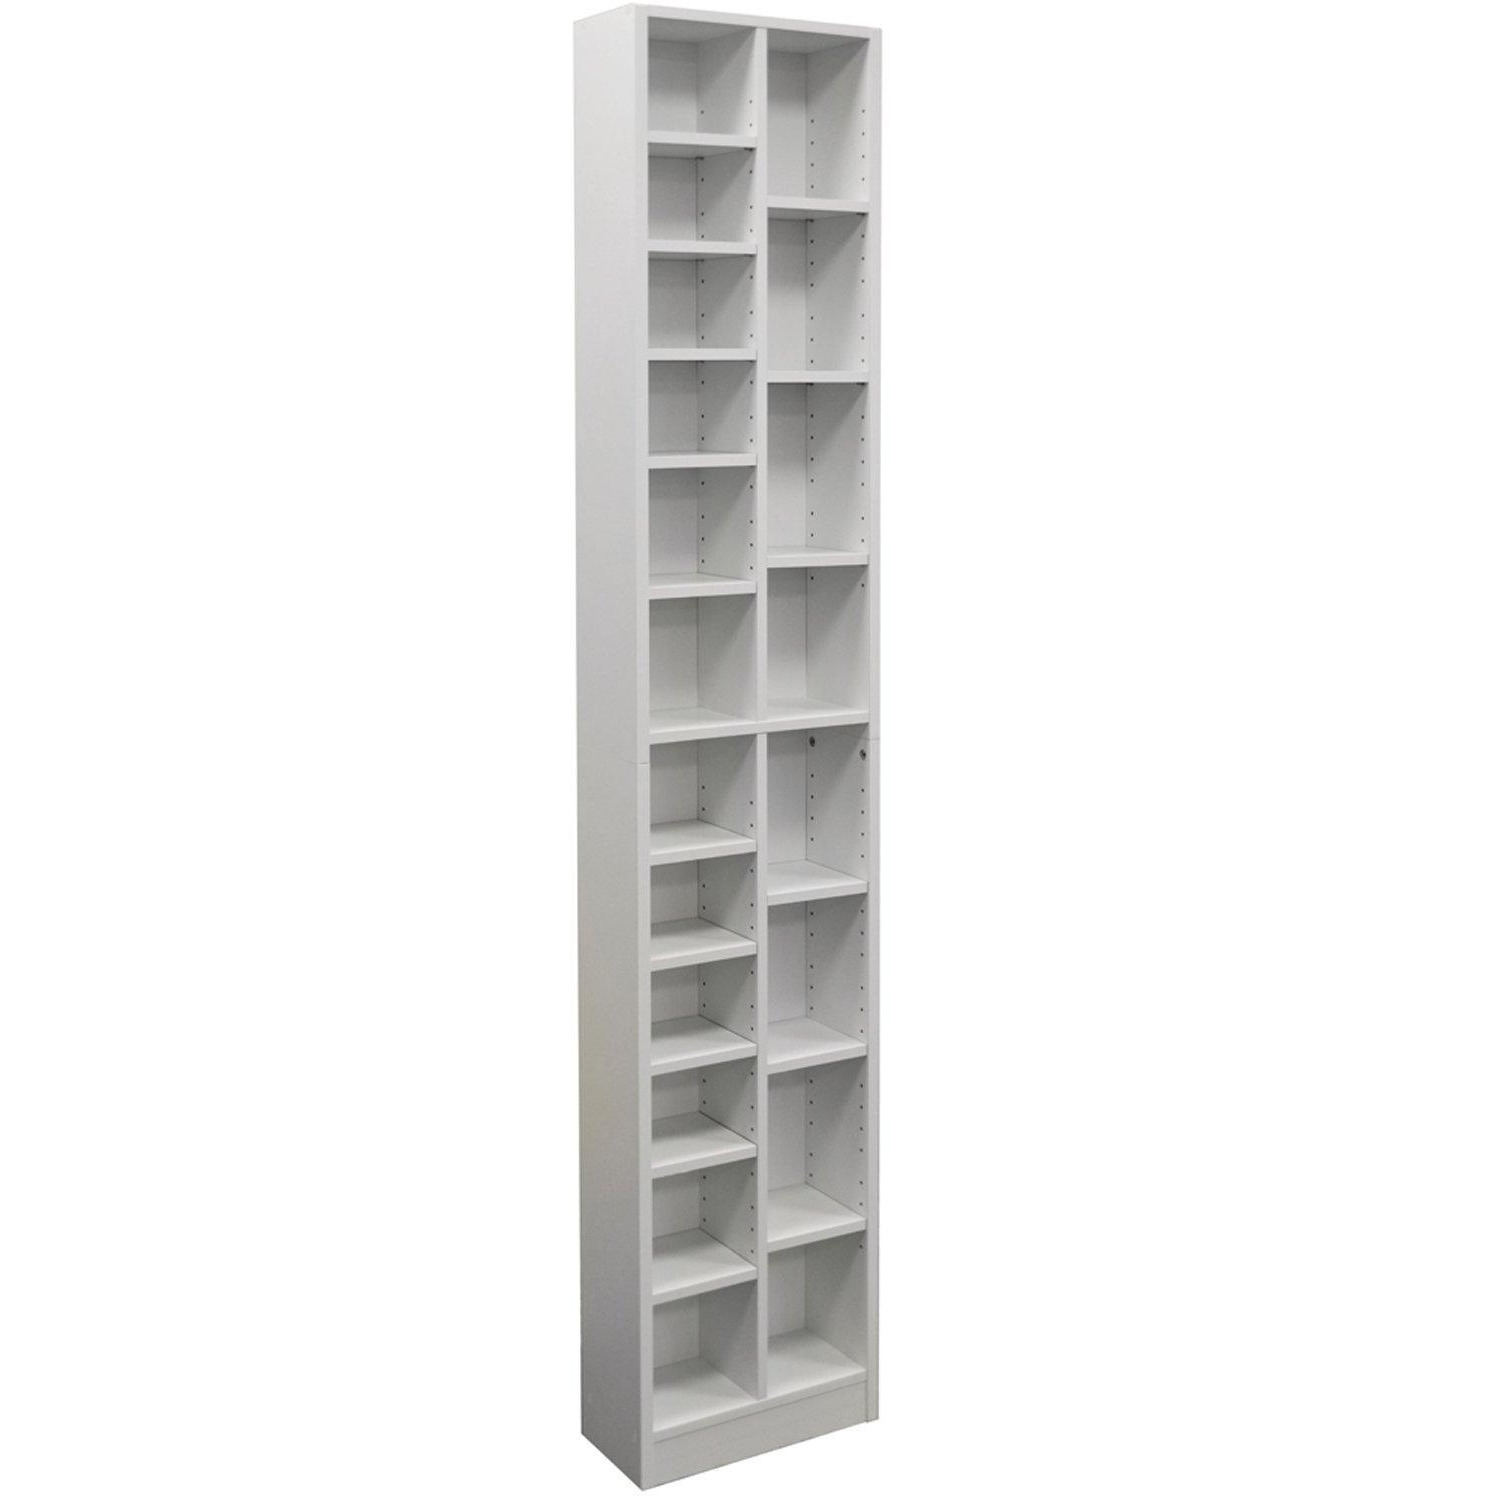 'Block' - Tall Sleek 360 Cd / 160 Dvd Media Storage Tower Shelves - White - image 1